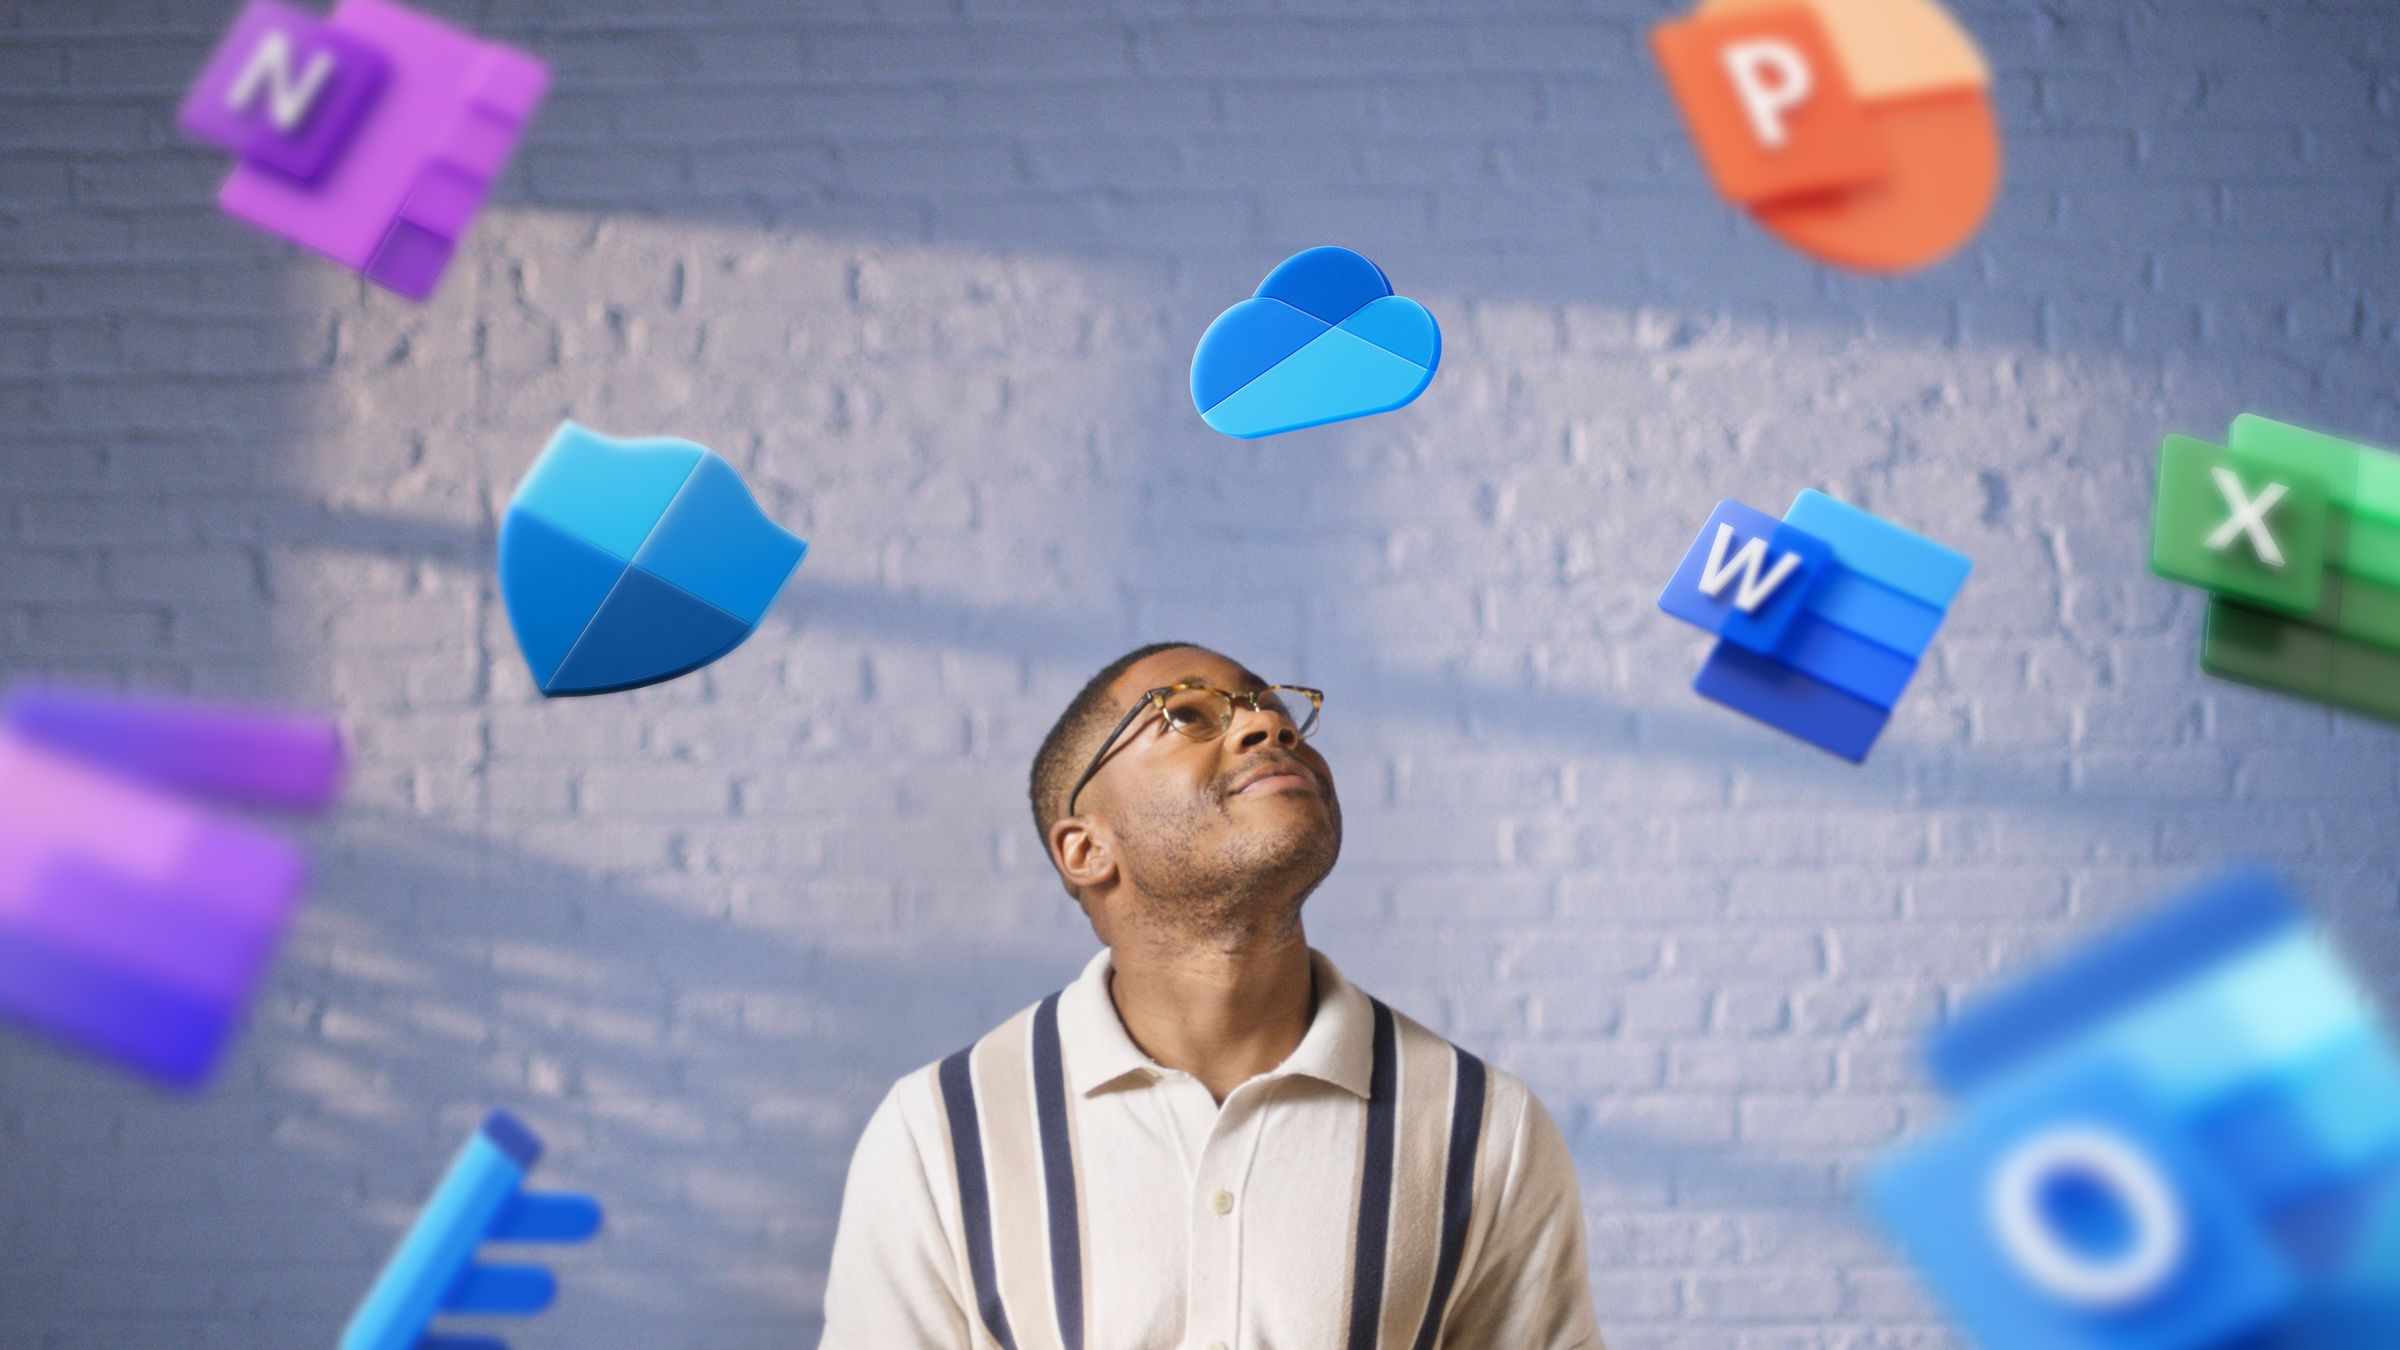 Illustration of Microsoft 365 logos around a man